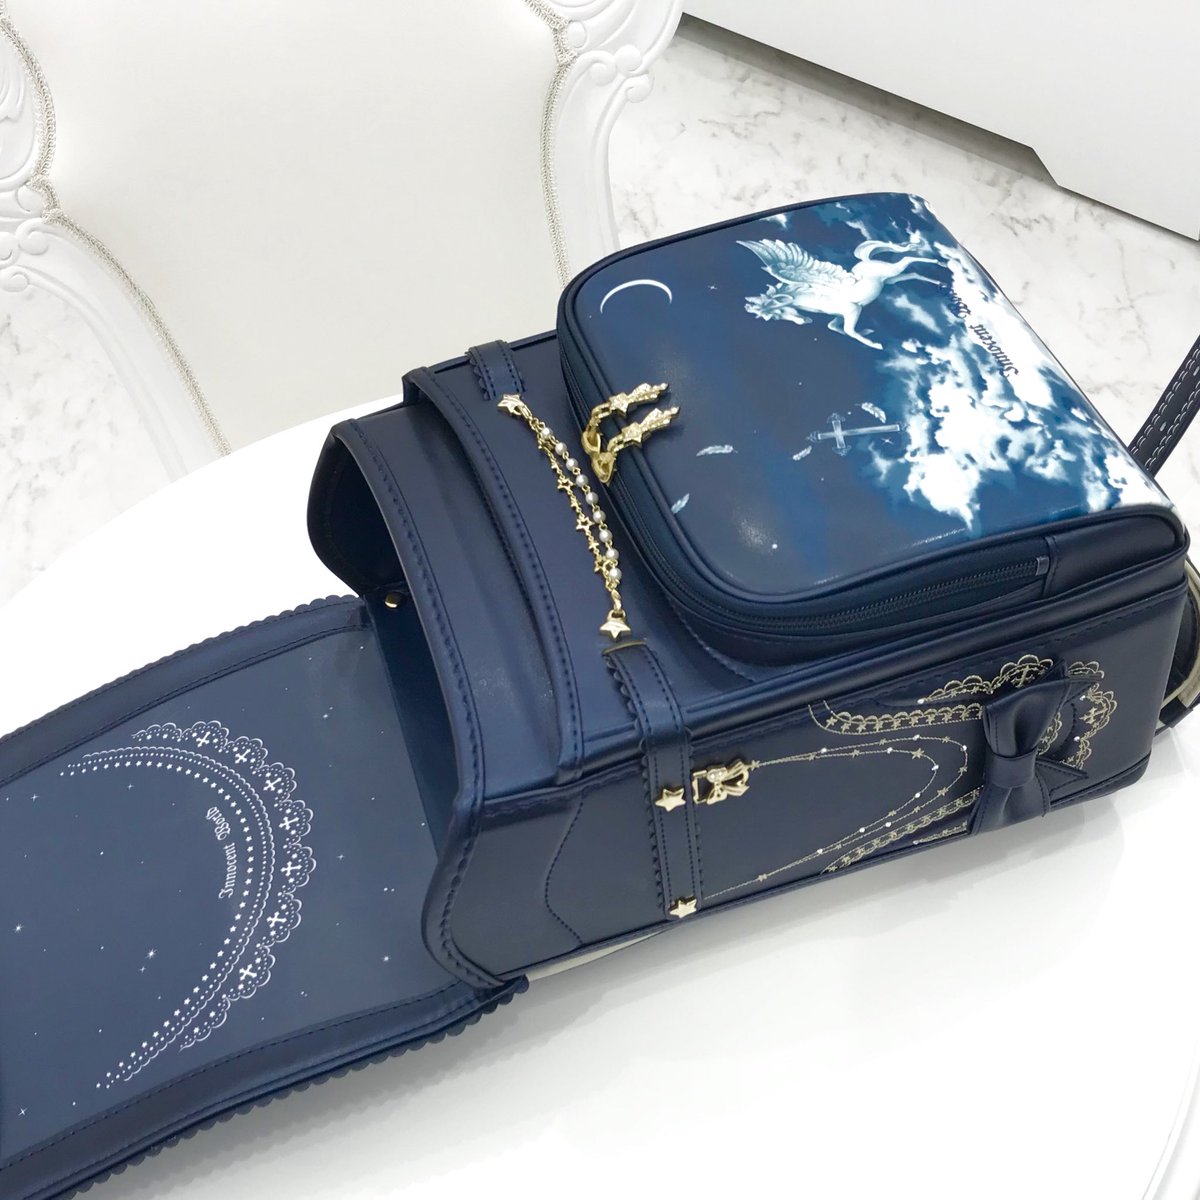 L Atelier Du Cartable ランドセル専門店 בטוויטר イノセントワールド クレシェントムーン 外も中も最高に かわいいランドセルです ラトリエデュカルターブル イノセントワールド ブランド ネイビー 紺 青 かわいい オシャレ 個性的 刺繍 人気 時期